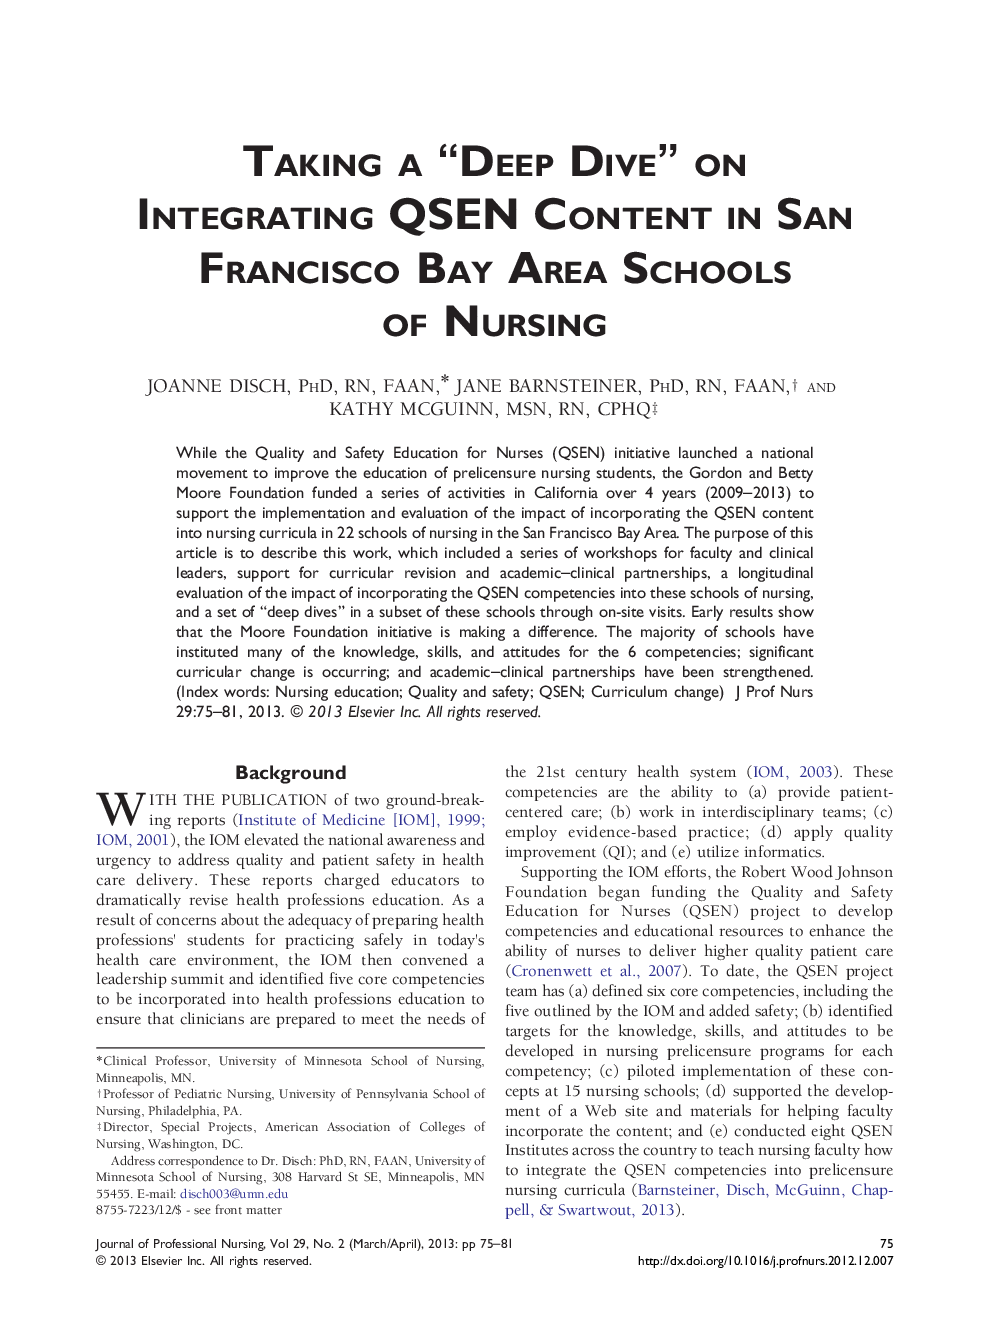 Taking a “Deep Dive” on Integrating QSEN Content in San Francisco Bay Area Schools of Nursing